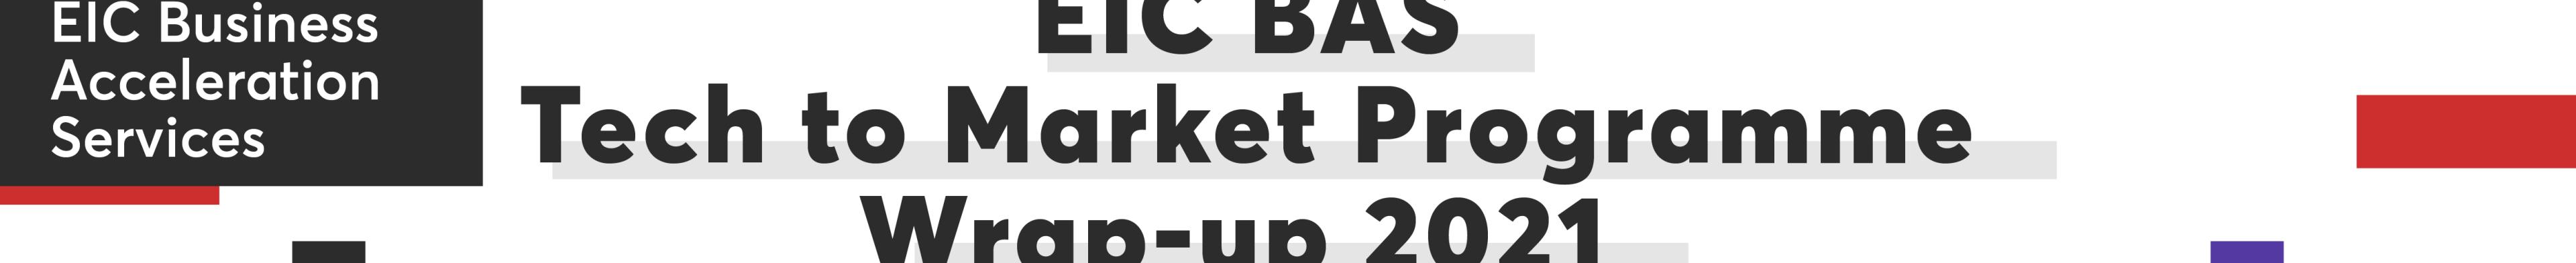 eic_bas_tech_to_market_programme_wrap-up_2021_community_banner_1.jpg